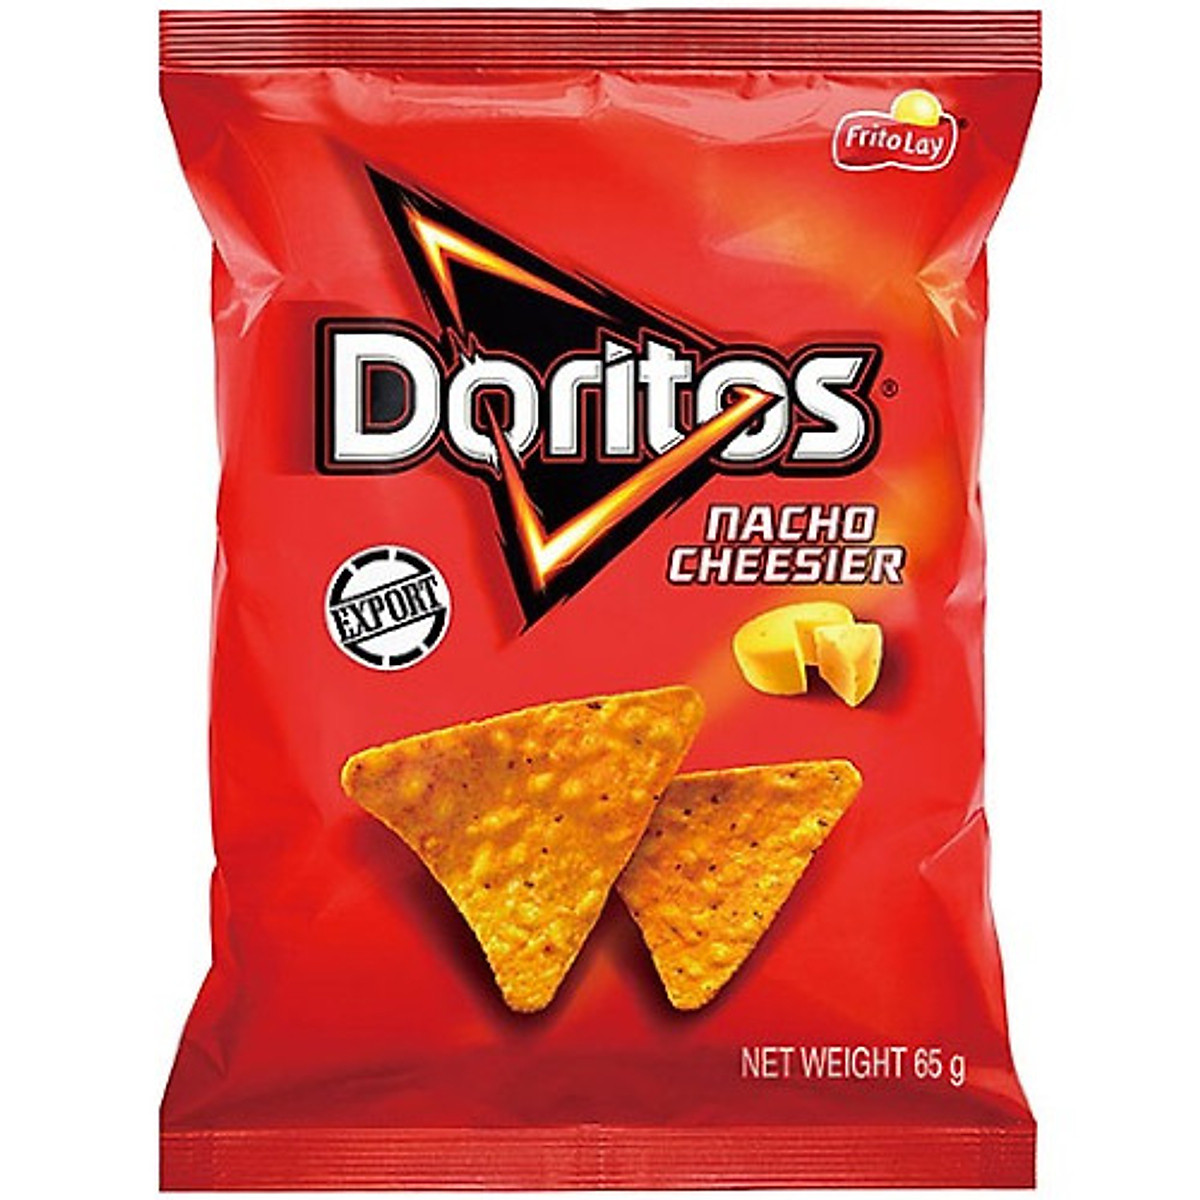 Snack Doritos nacho cheesier